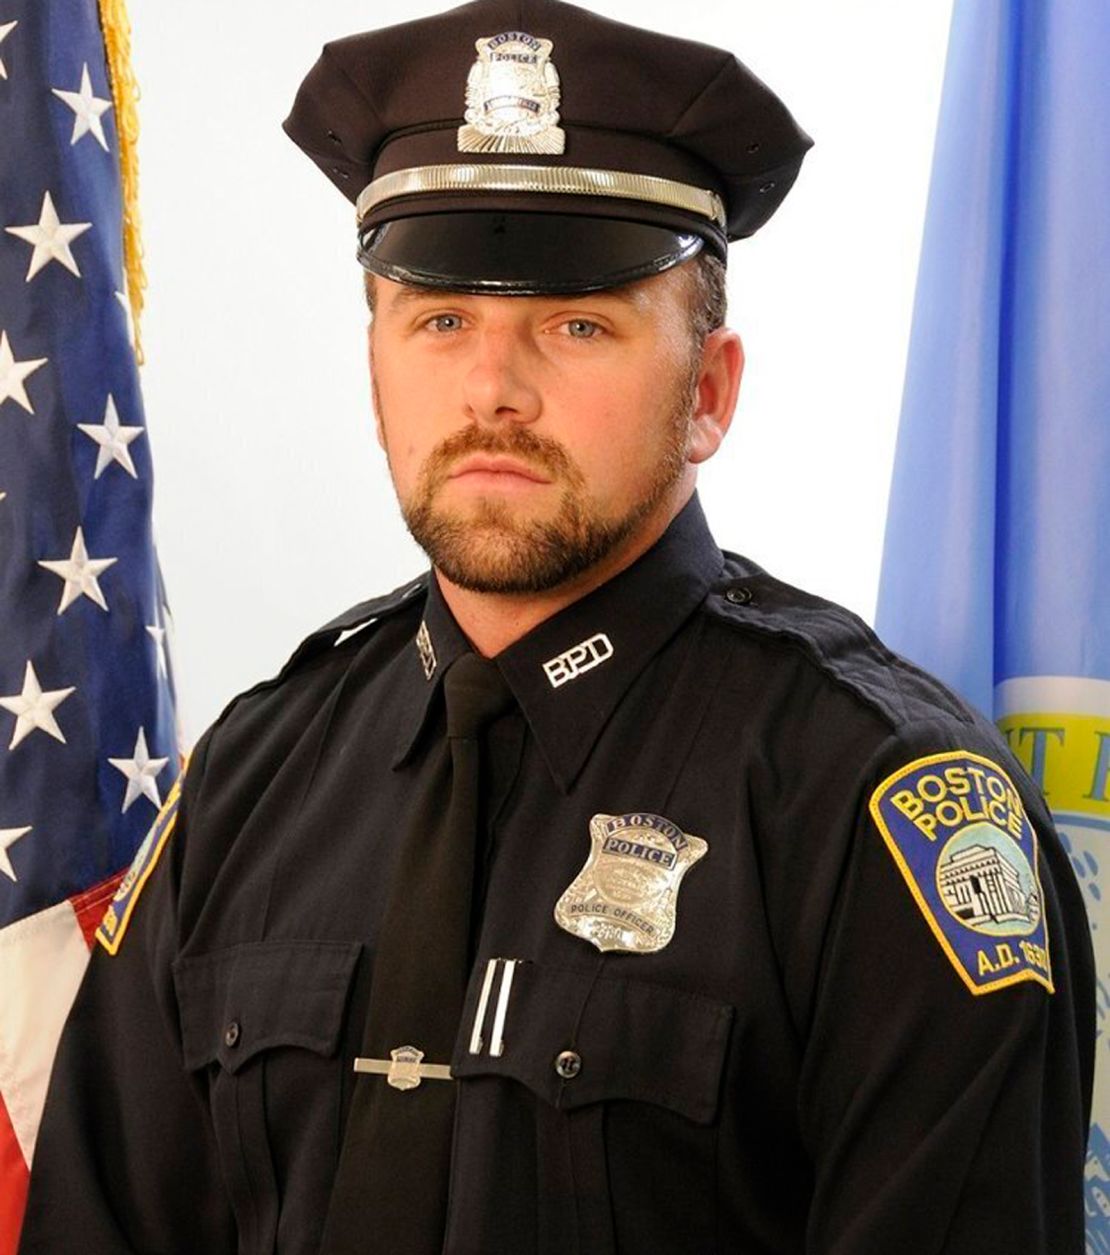 Boston Police Officer John O'Keefe.